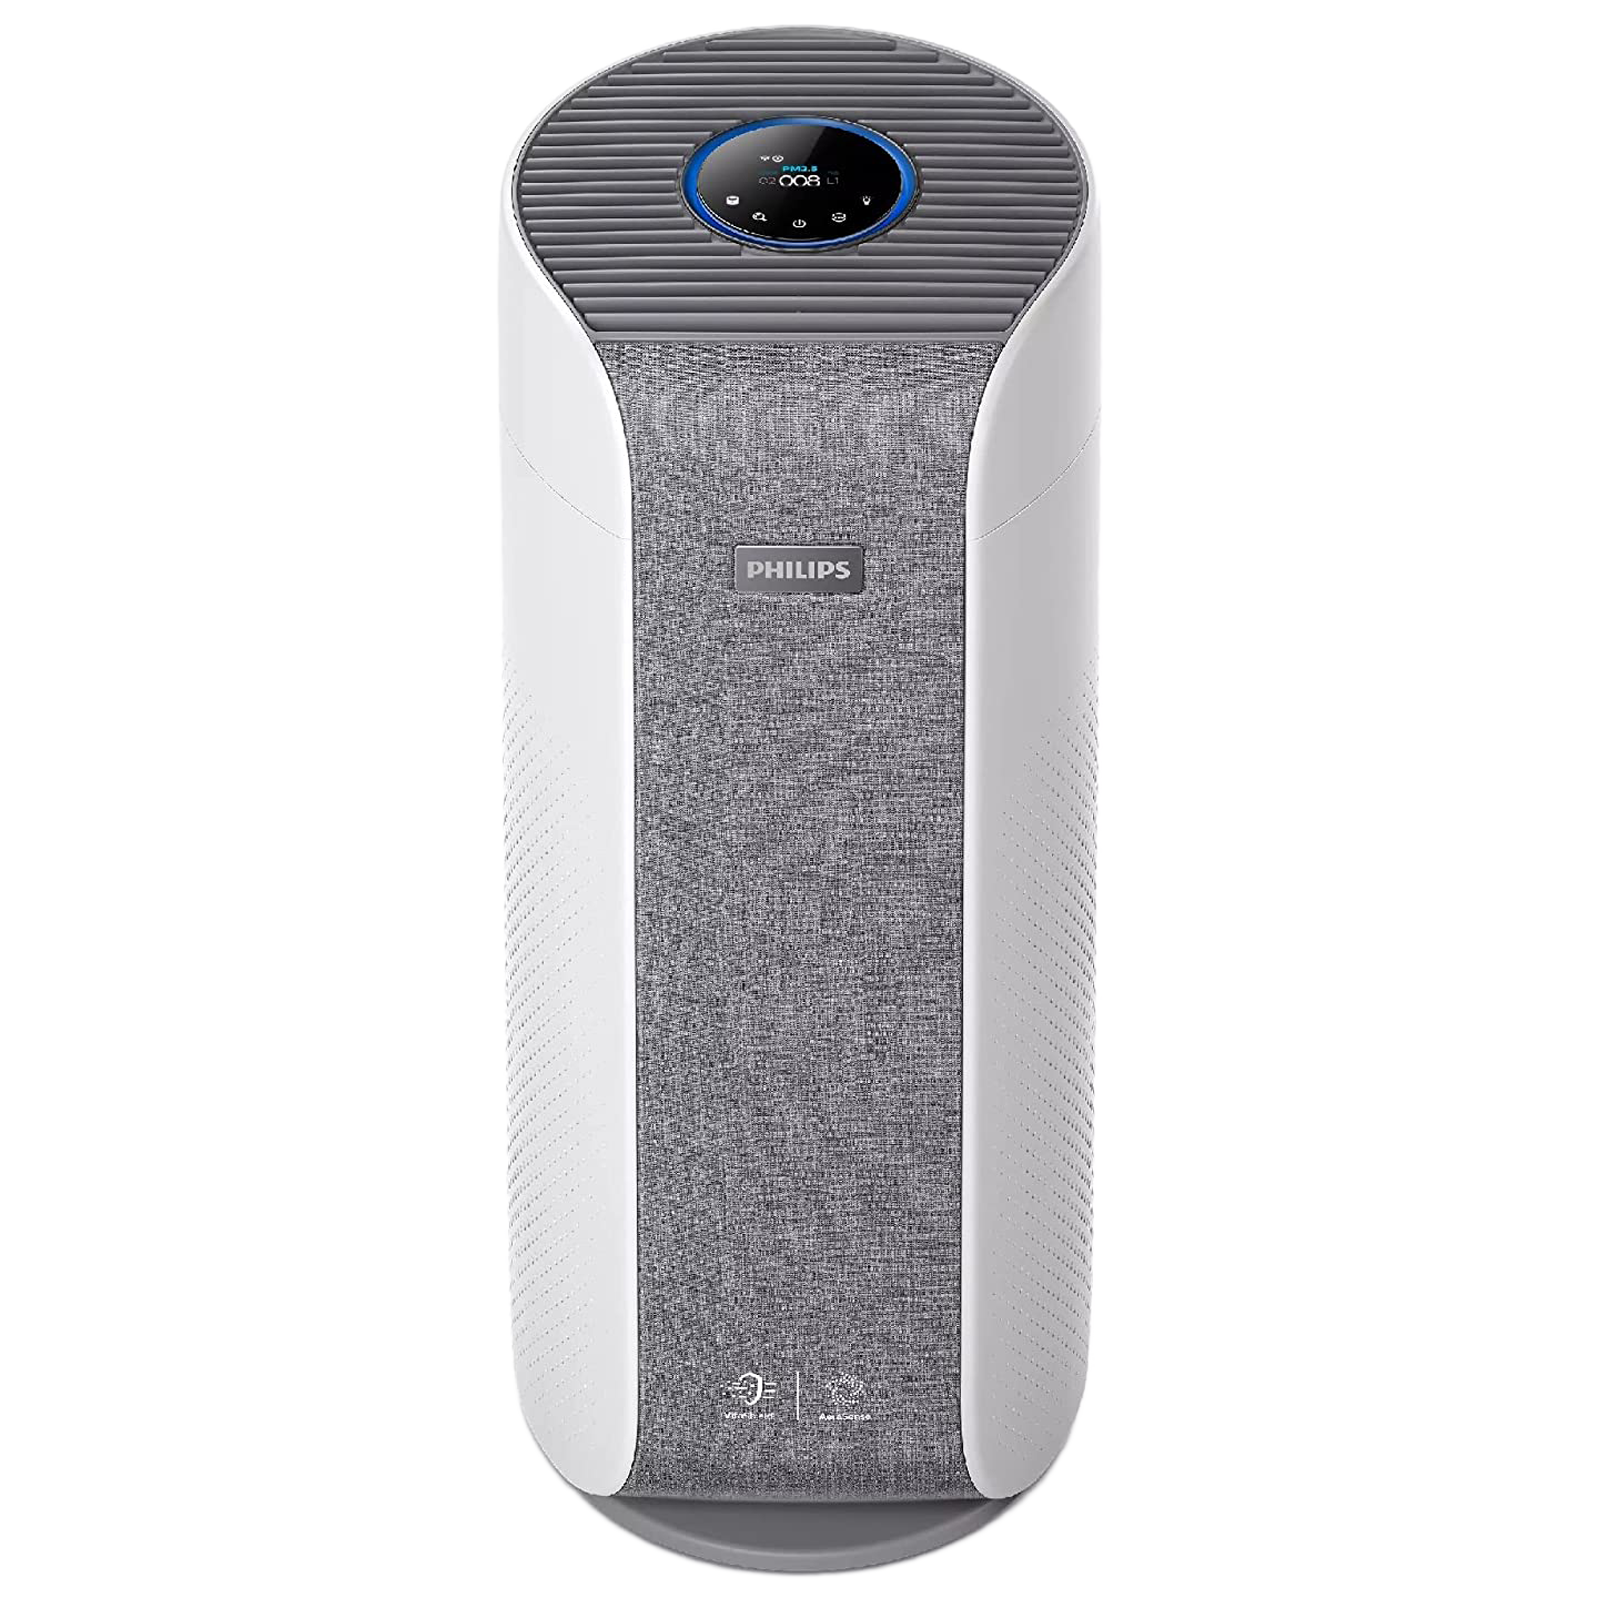 Philips 4000i Aera Sense Technology Air Purifier (Smart filter indicator, AC3858/63, White/Grey)_1